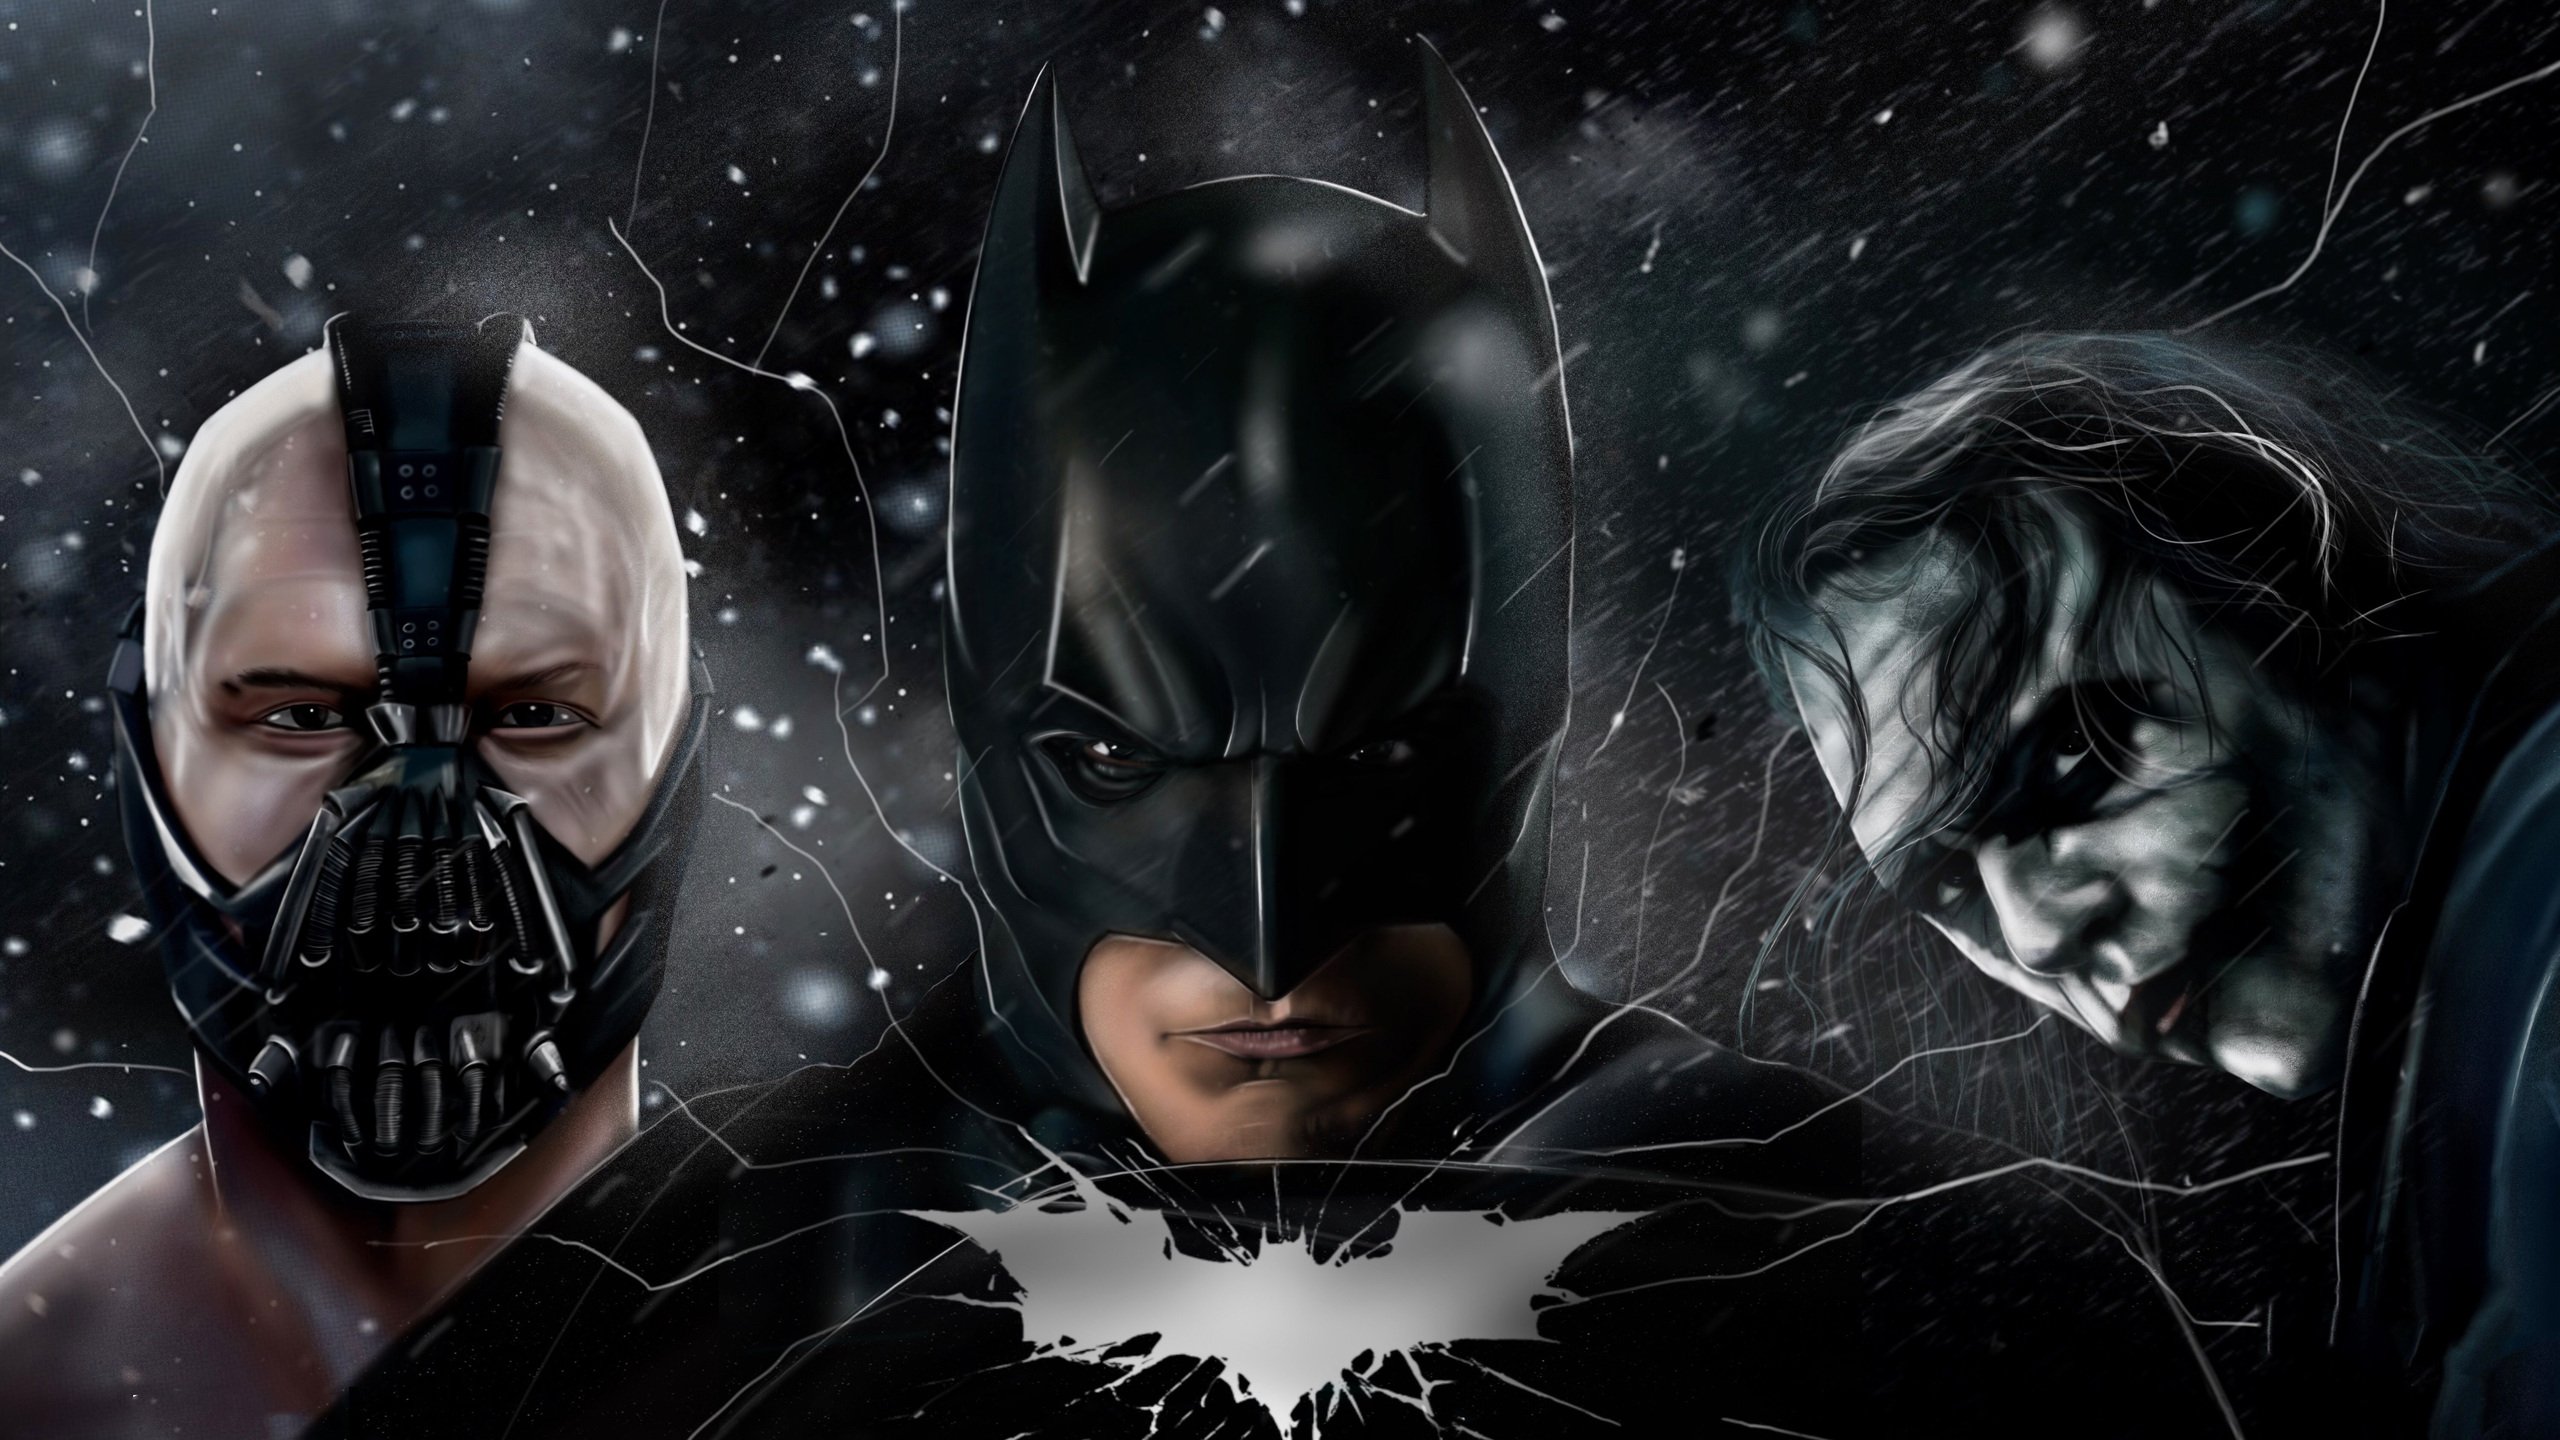 The Dark Knight Batman Joker Bane 5k 1440P Resolution HD 4k Wallpaper, Image, Background, Photo and Picture